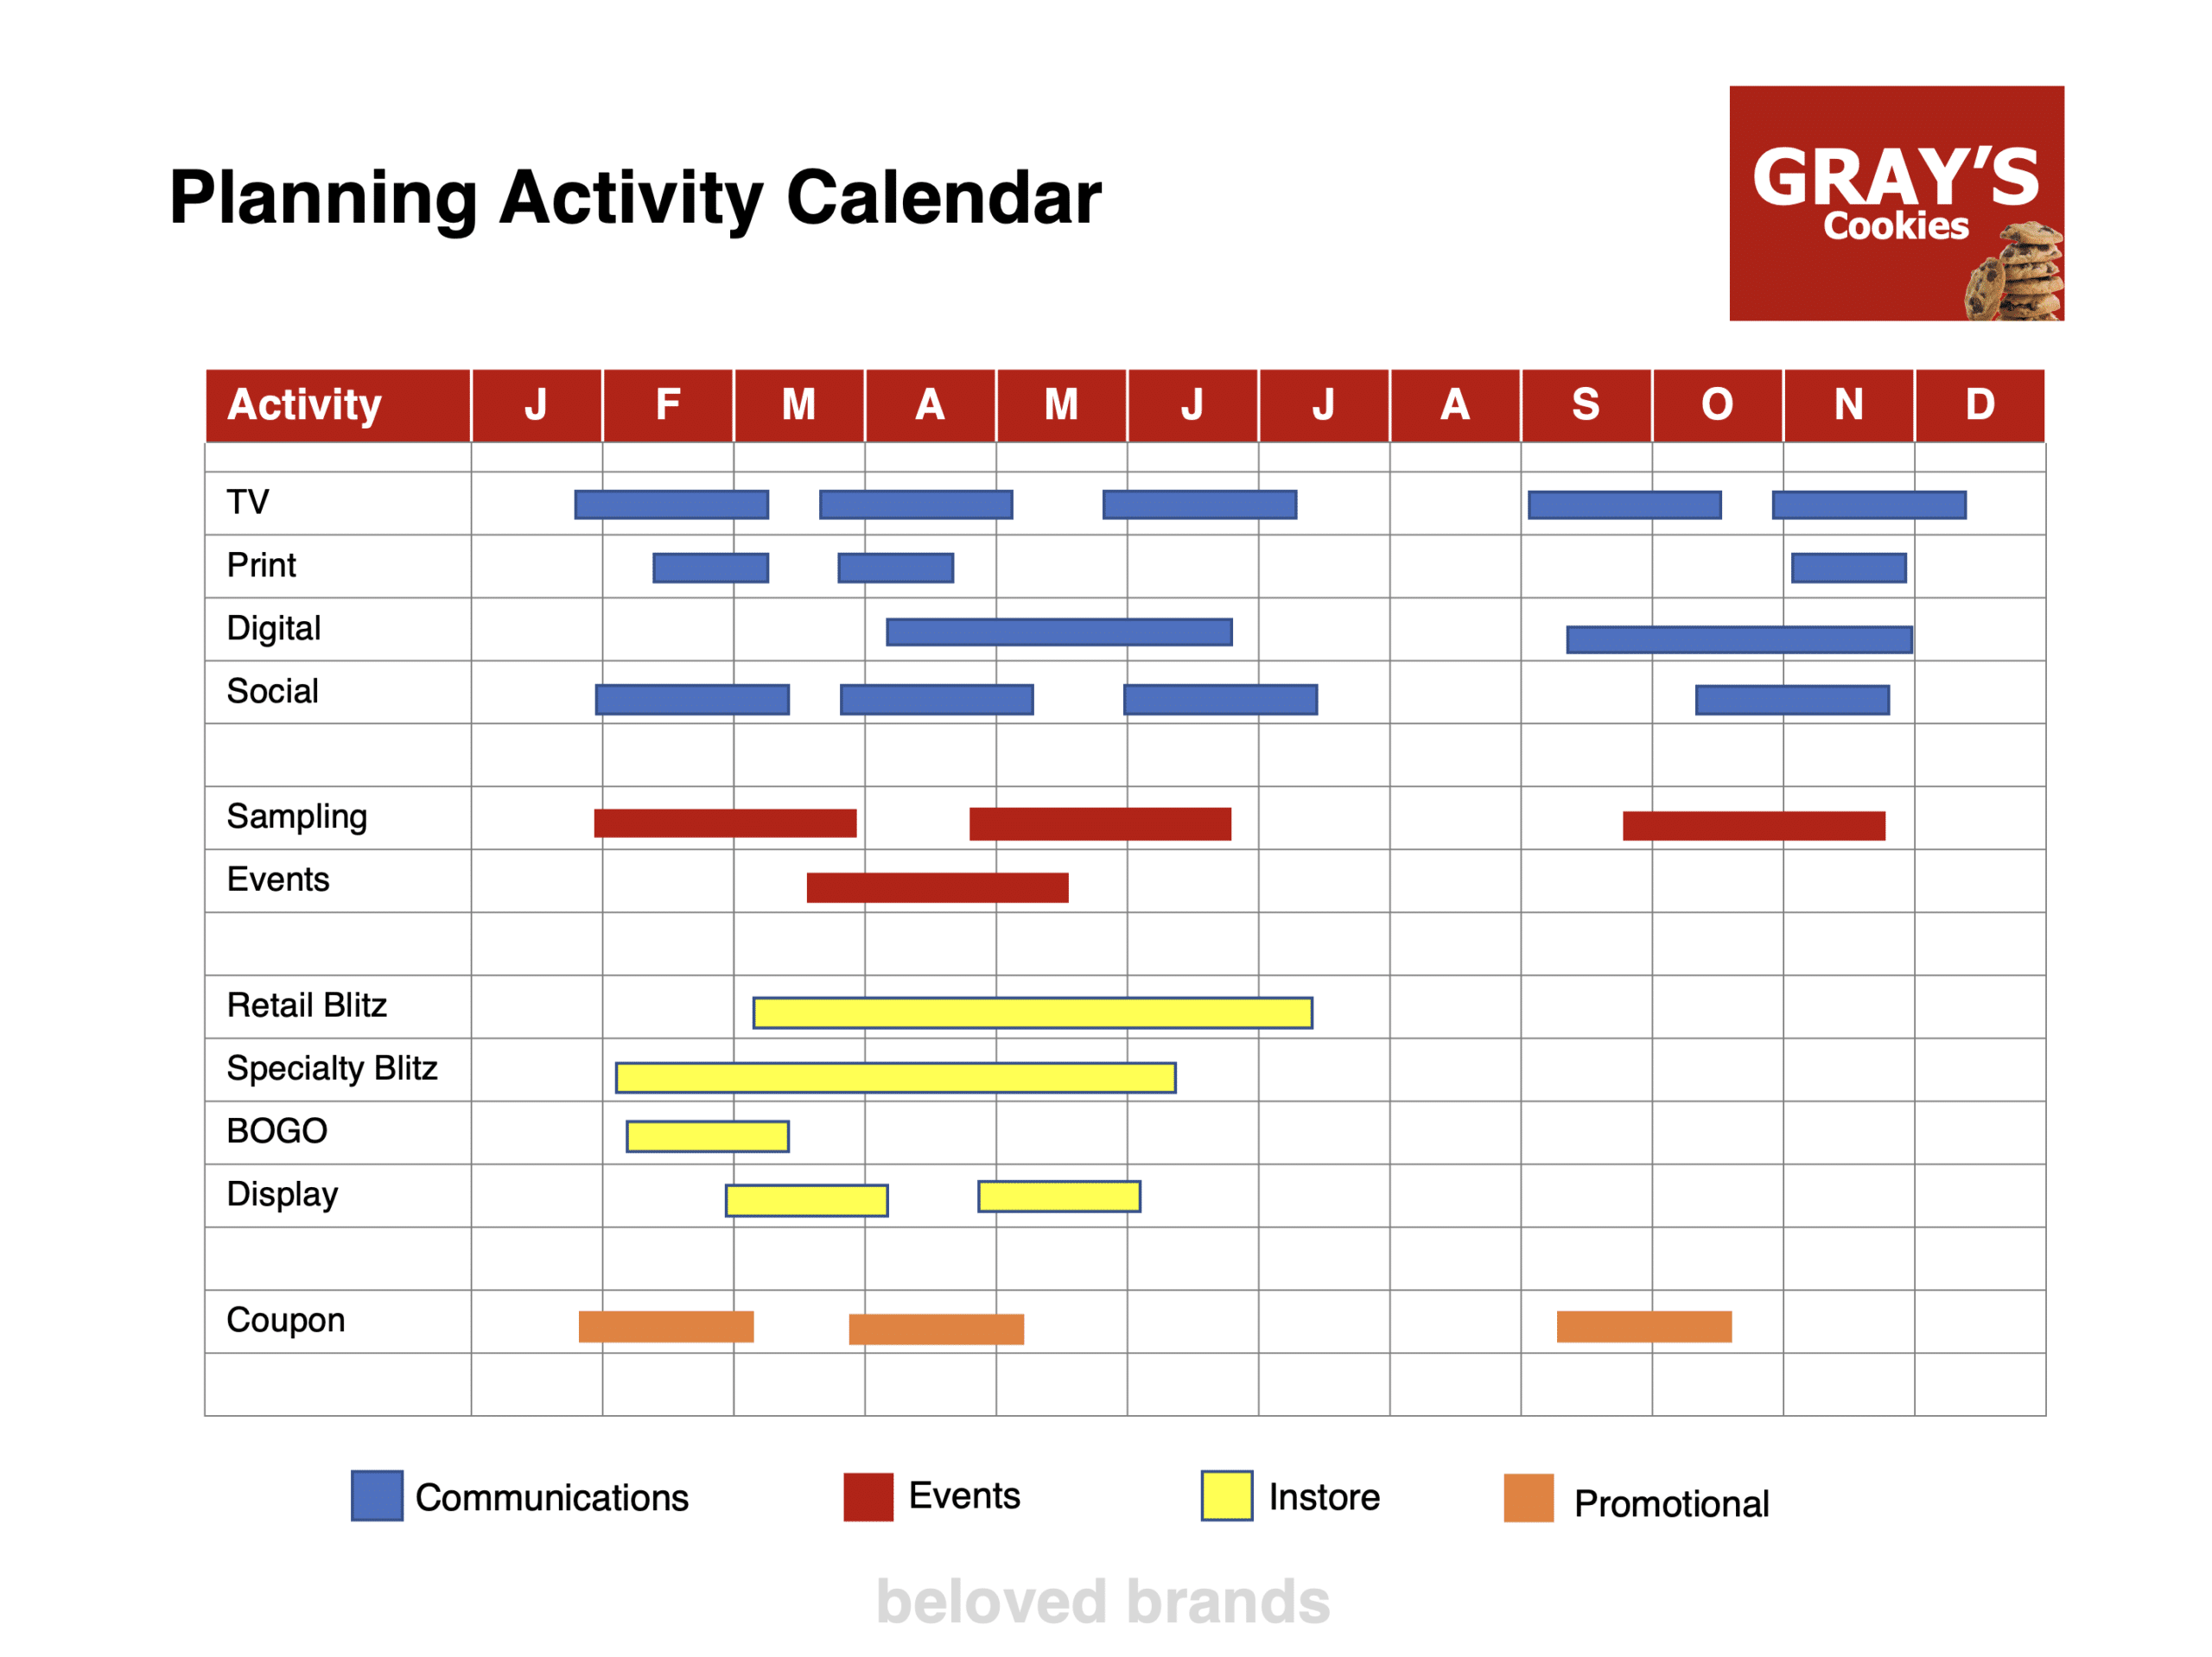 Planning Activity Calendar